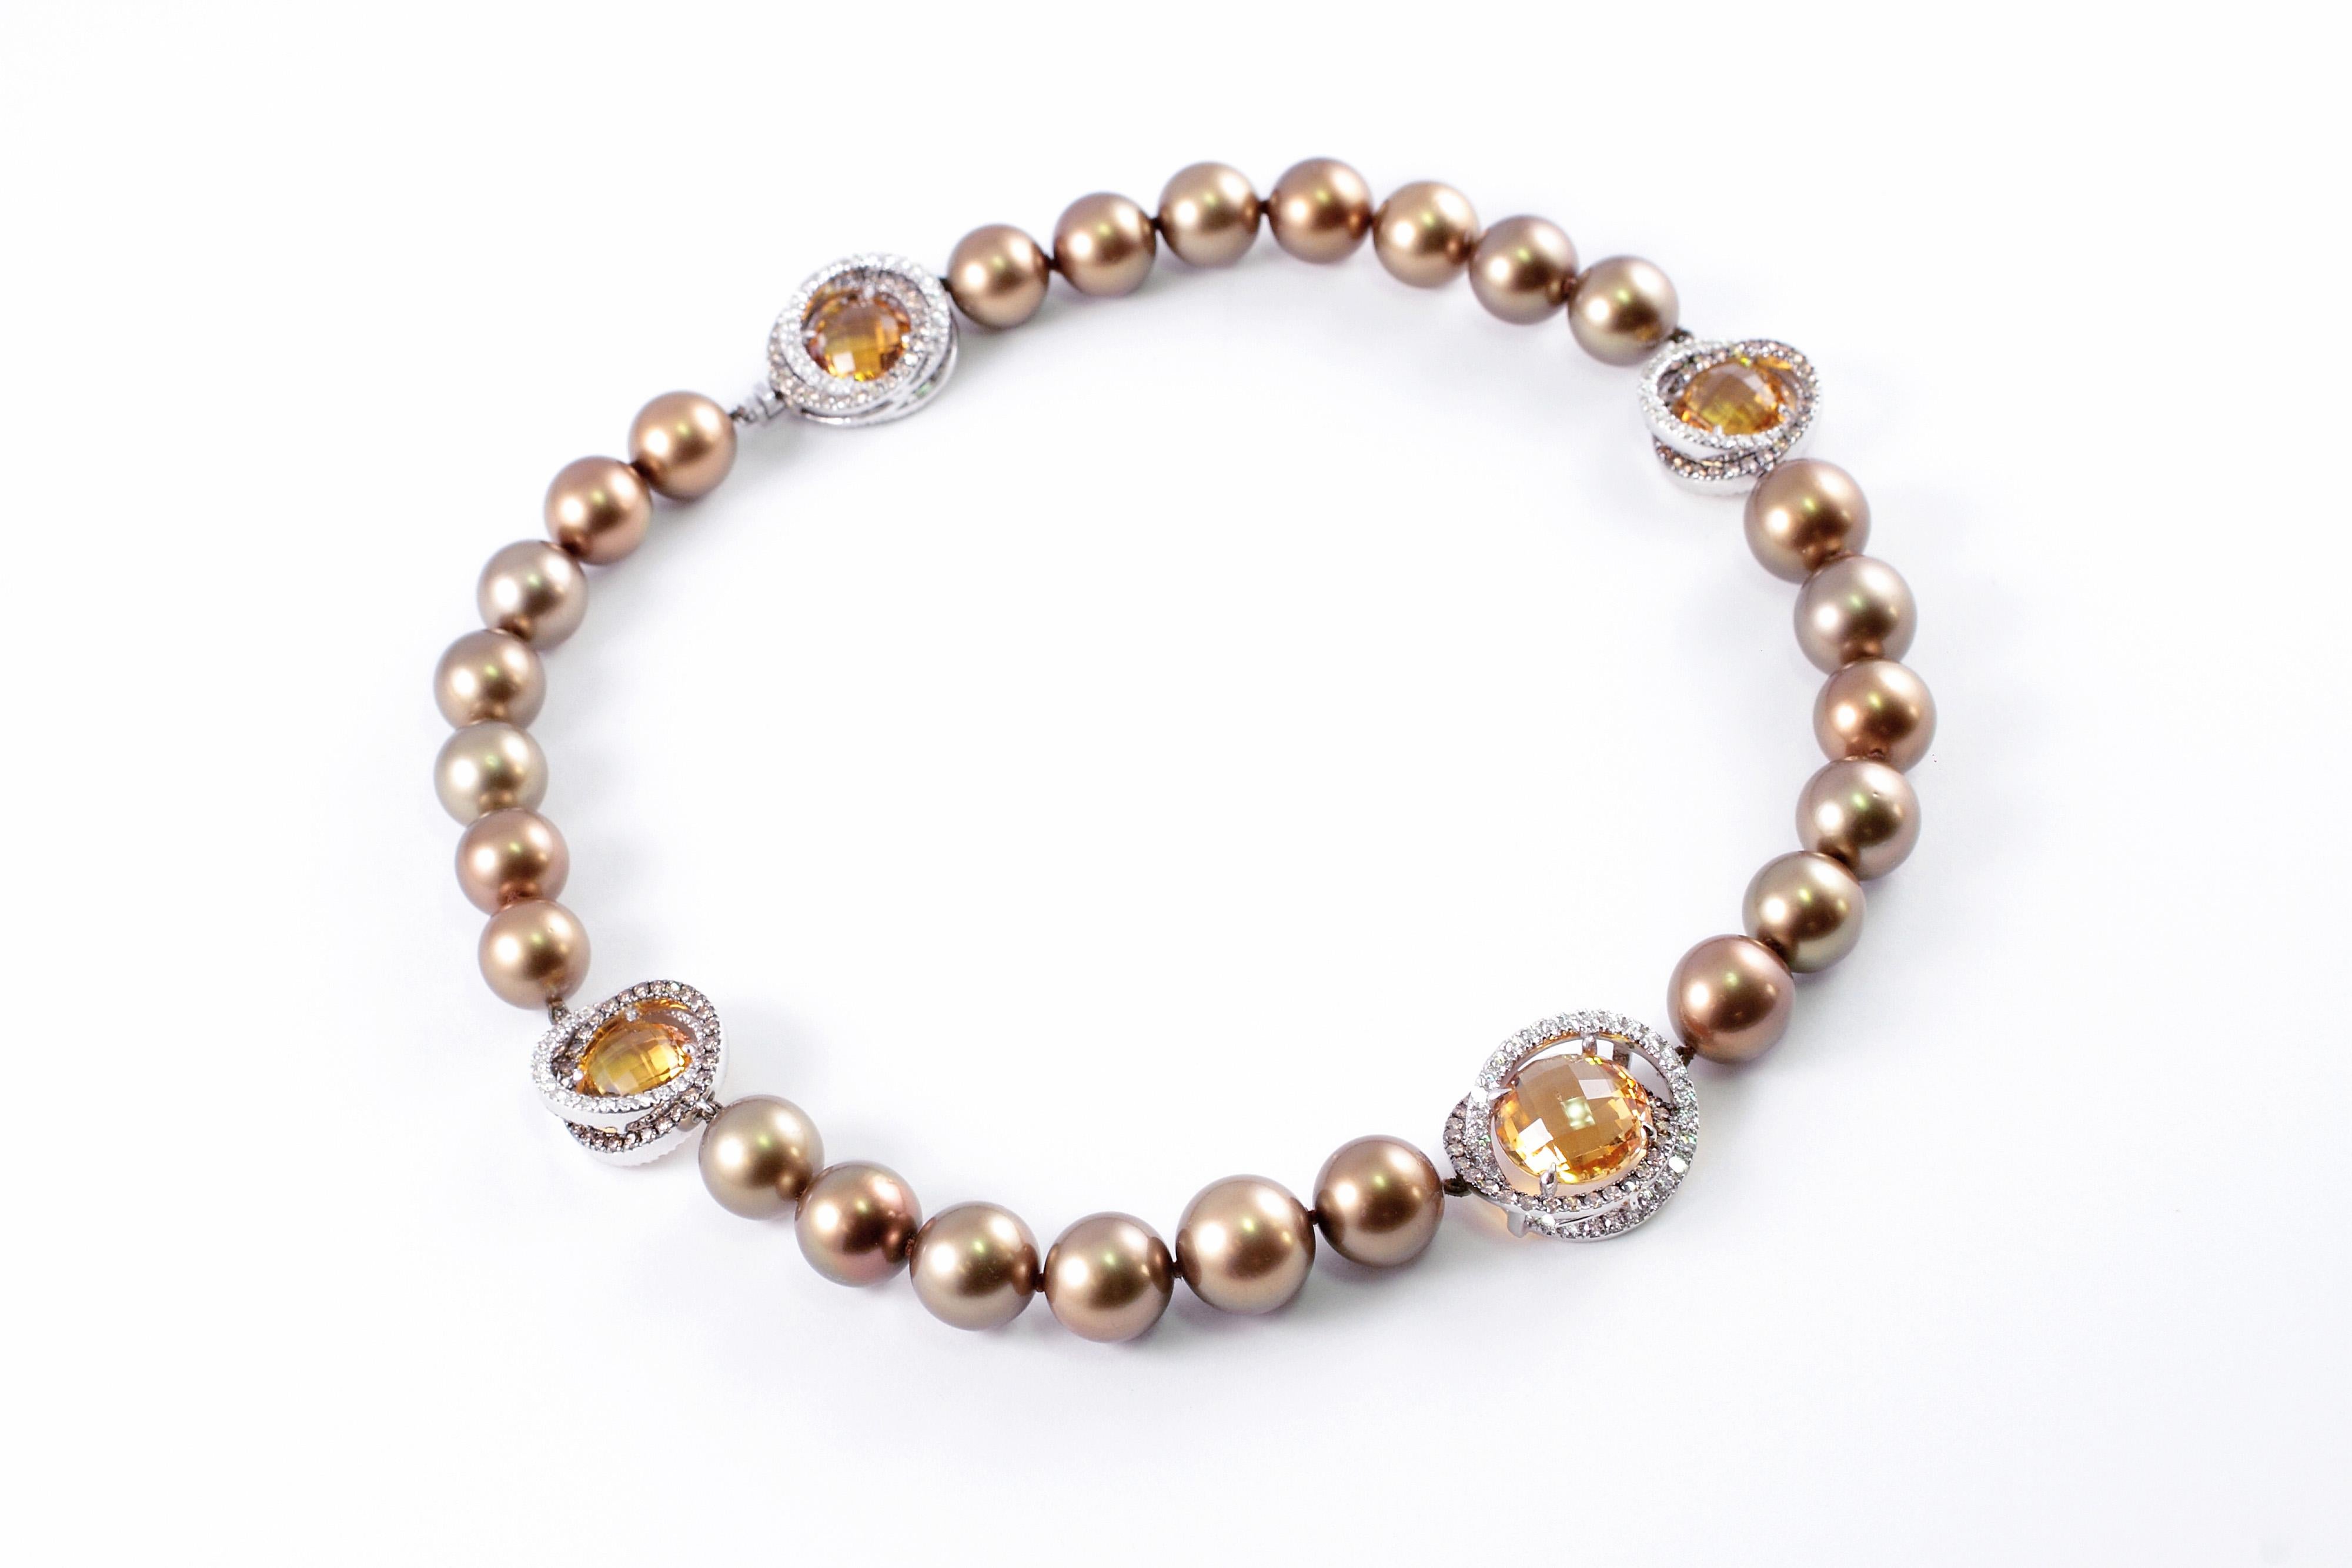 By famed Australian jewelry designer Margot McKinney, this stunning necklace is set with twenty-six 